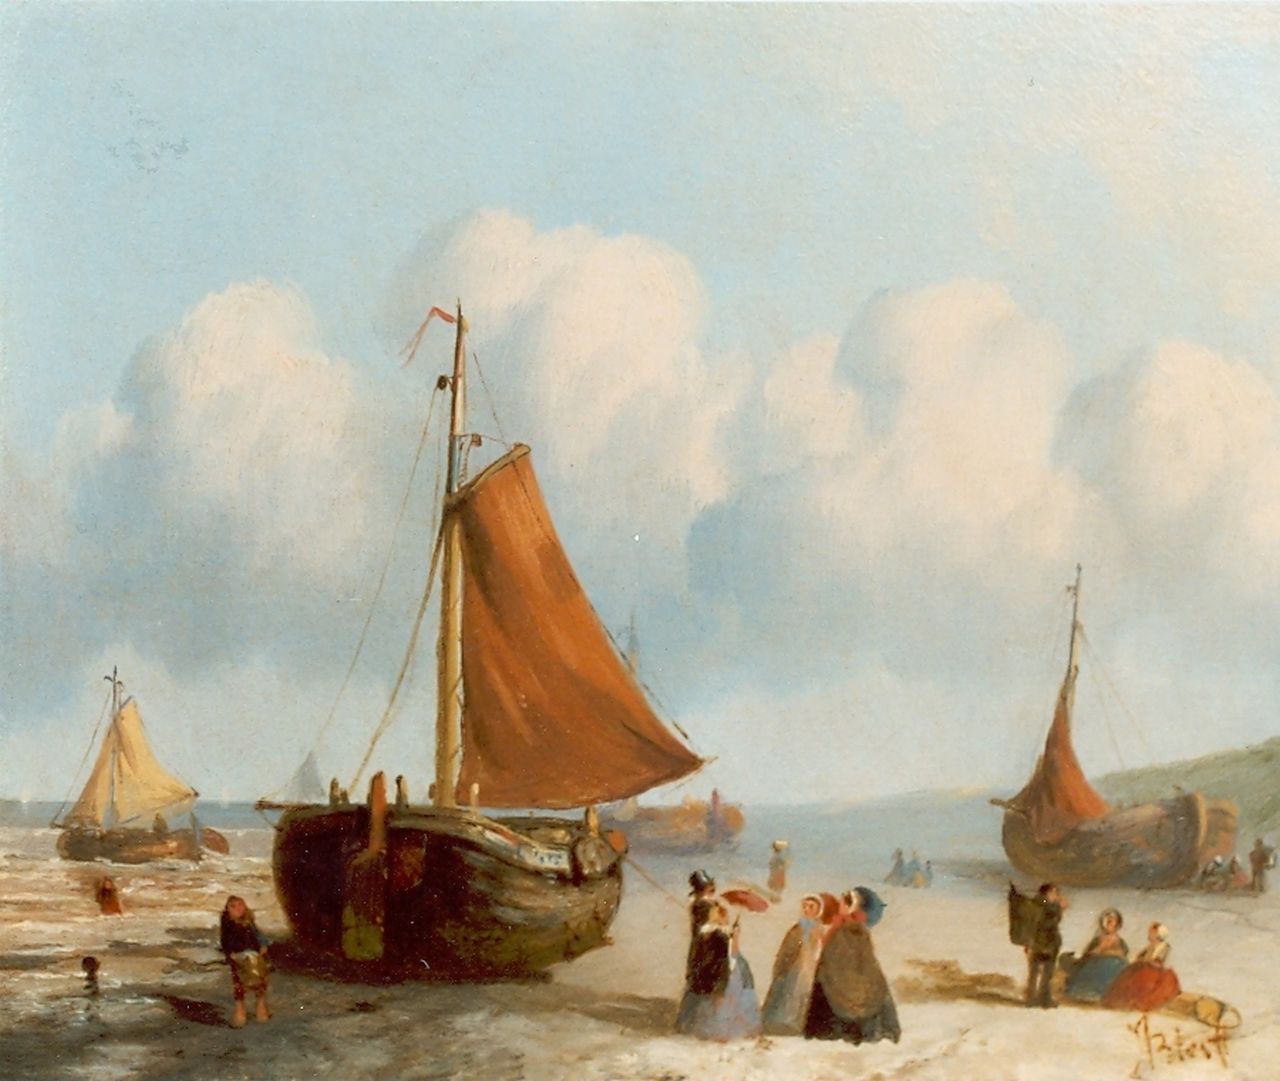 Bles J.  | Joseph Bles, Daily activities on the beach of Scheveningen, oil on panel 20.0 x 25.5 cm, signed l.r.